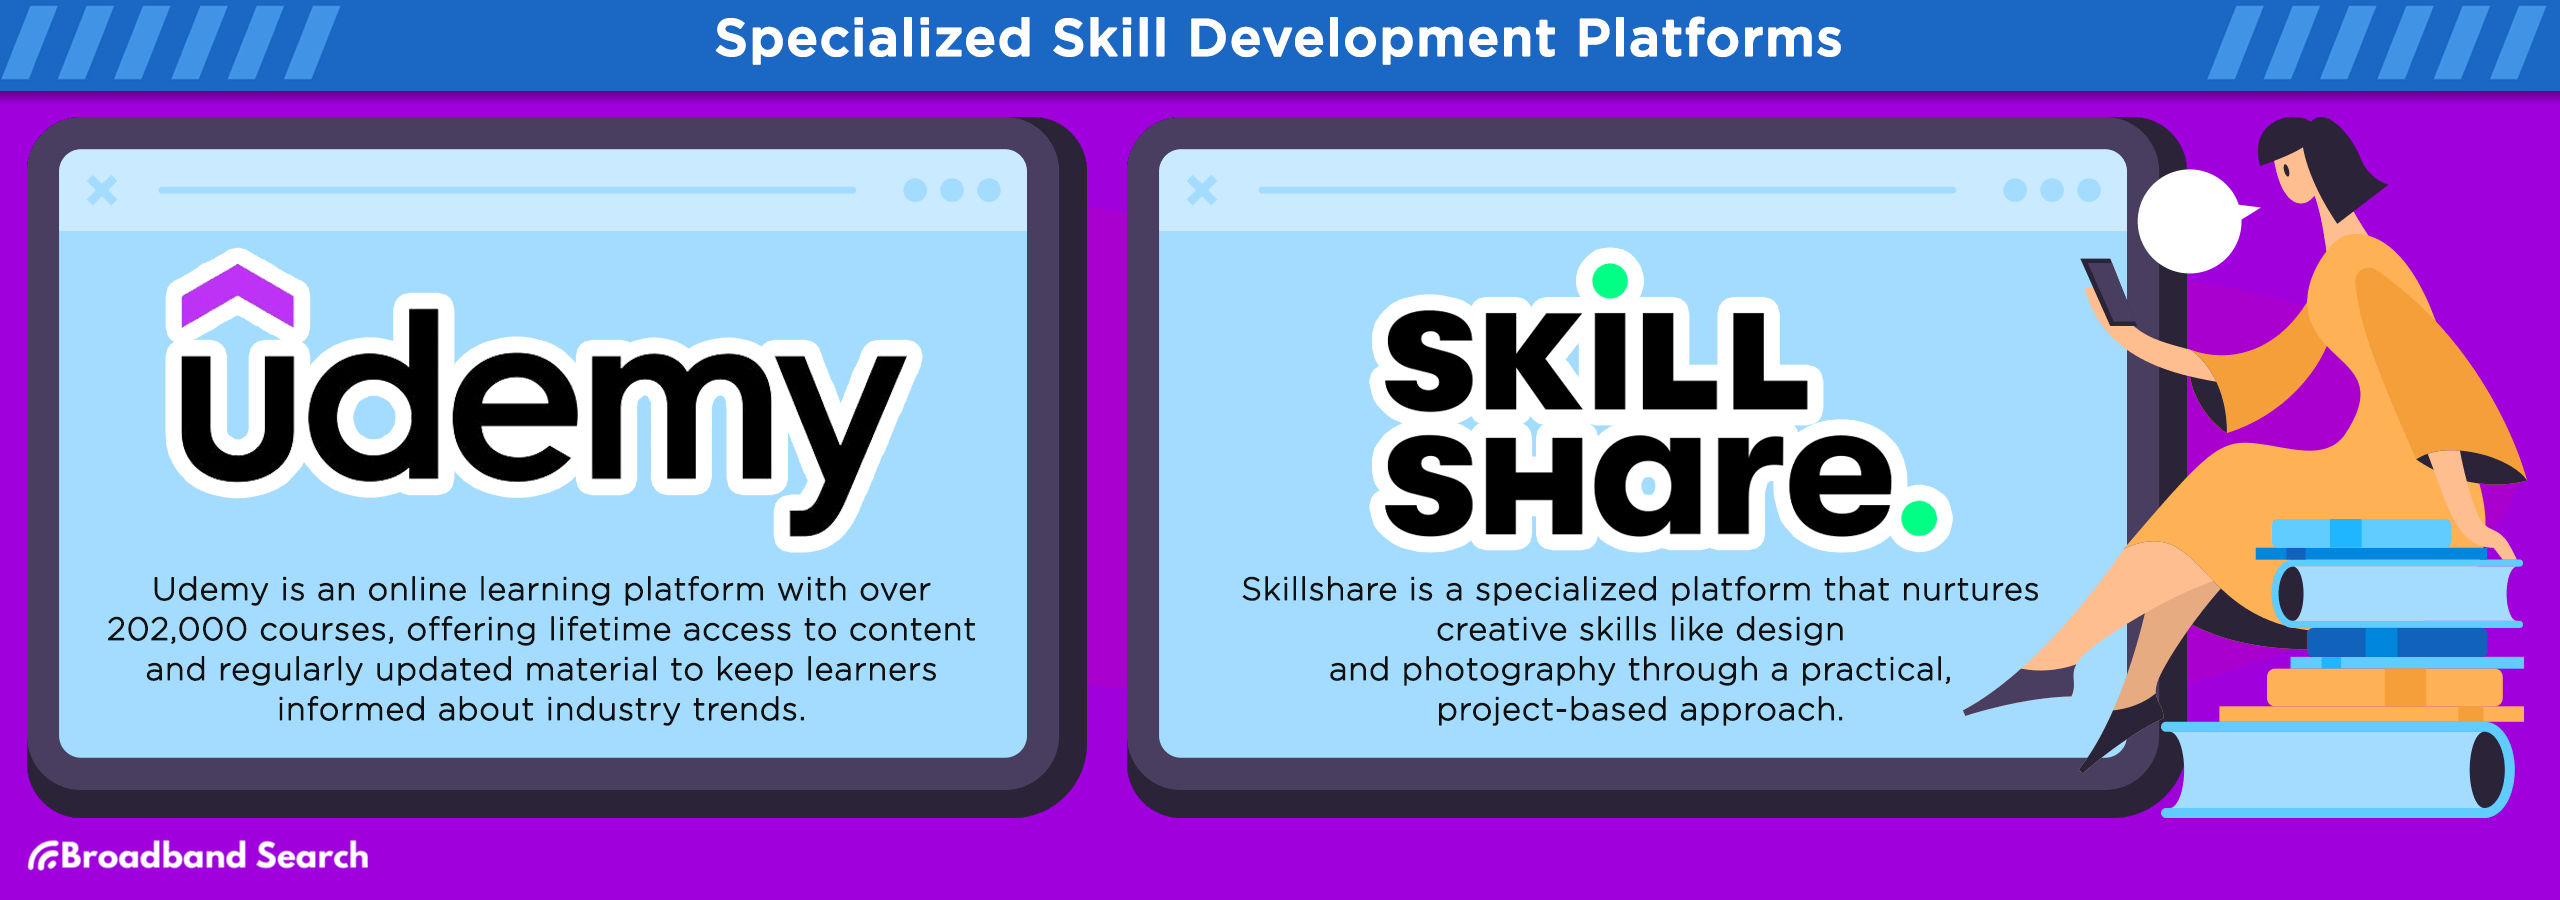 Specialized skill development platforms